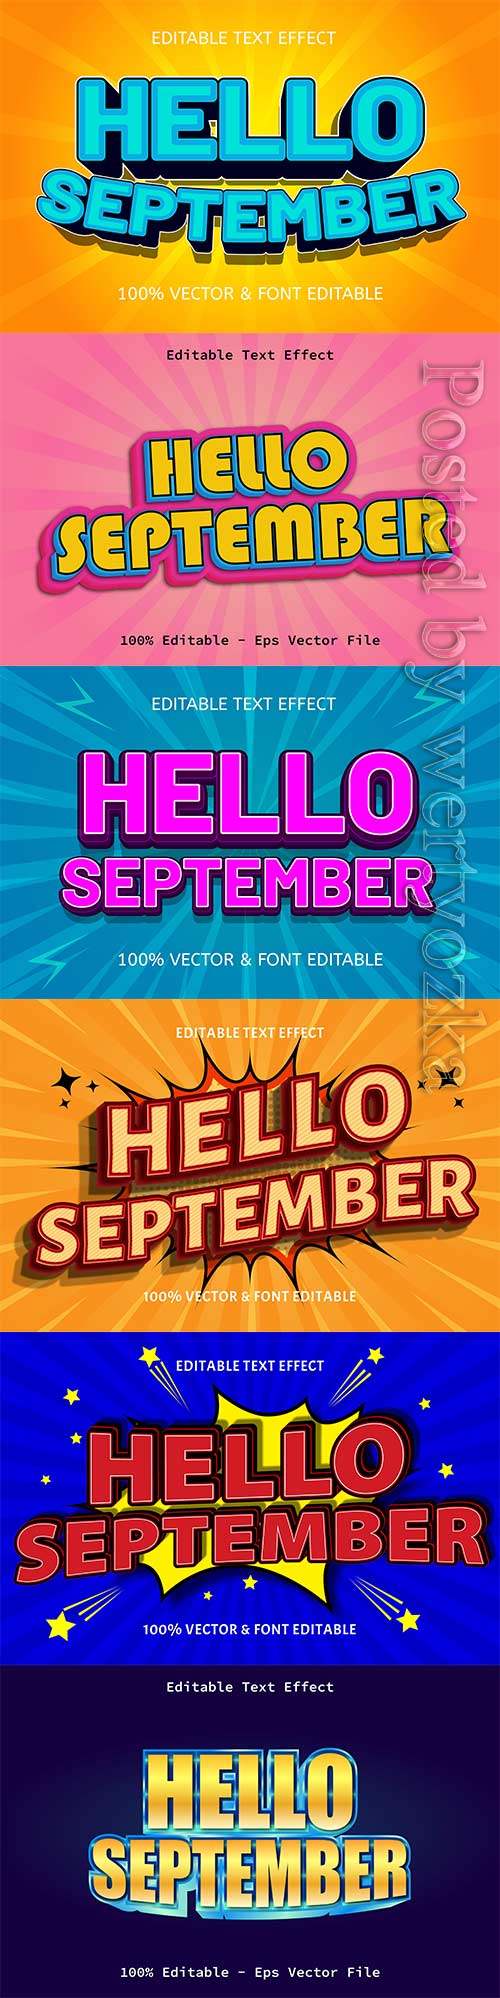 Hello september editable text effect vol 11